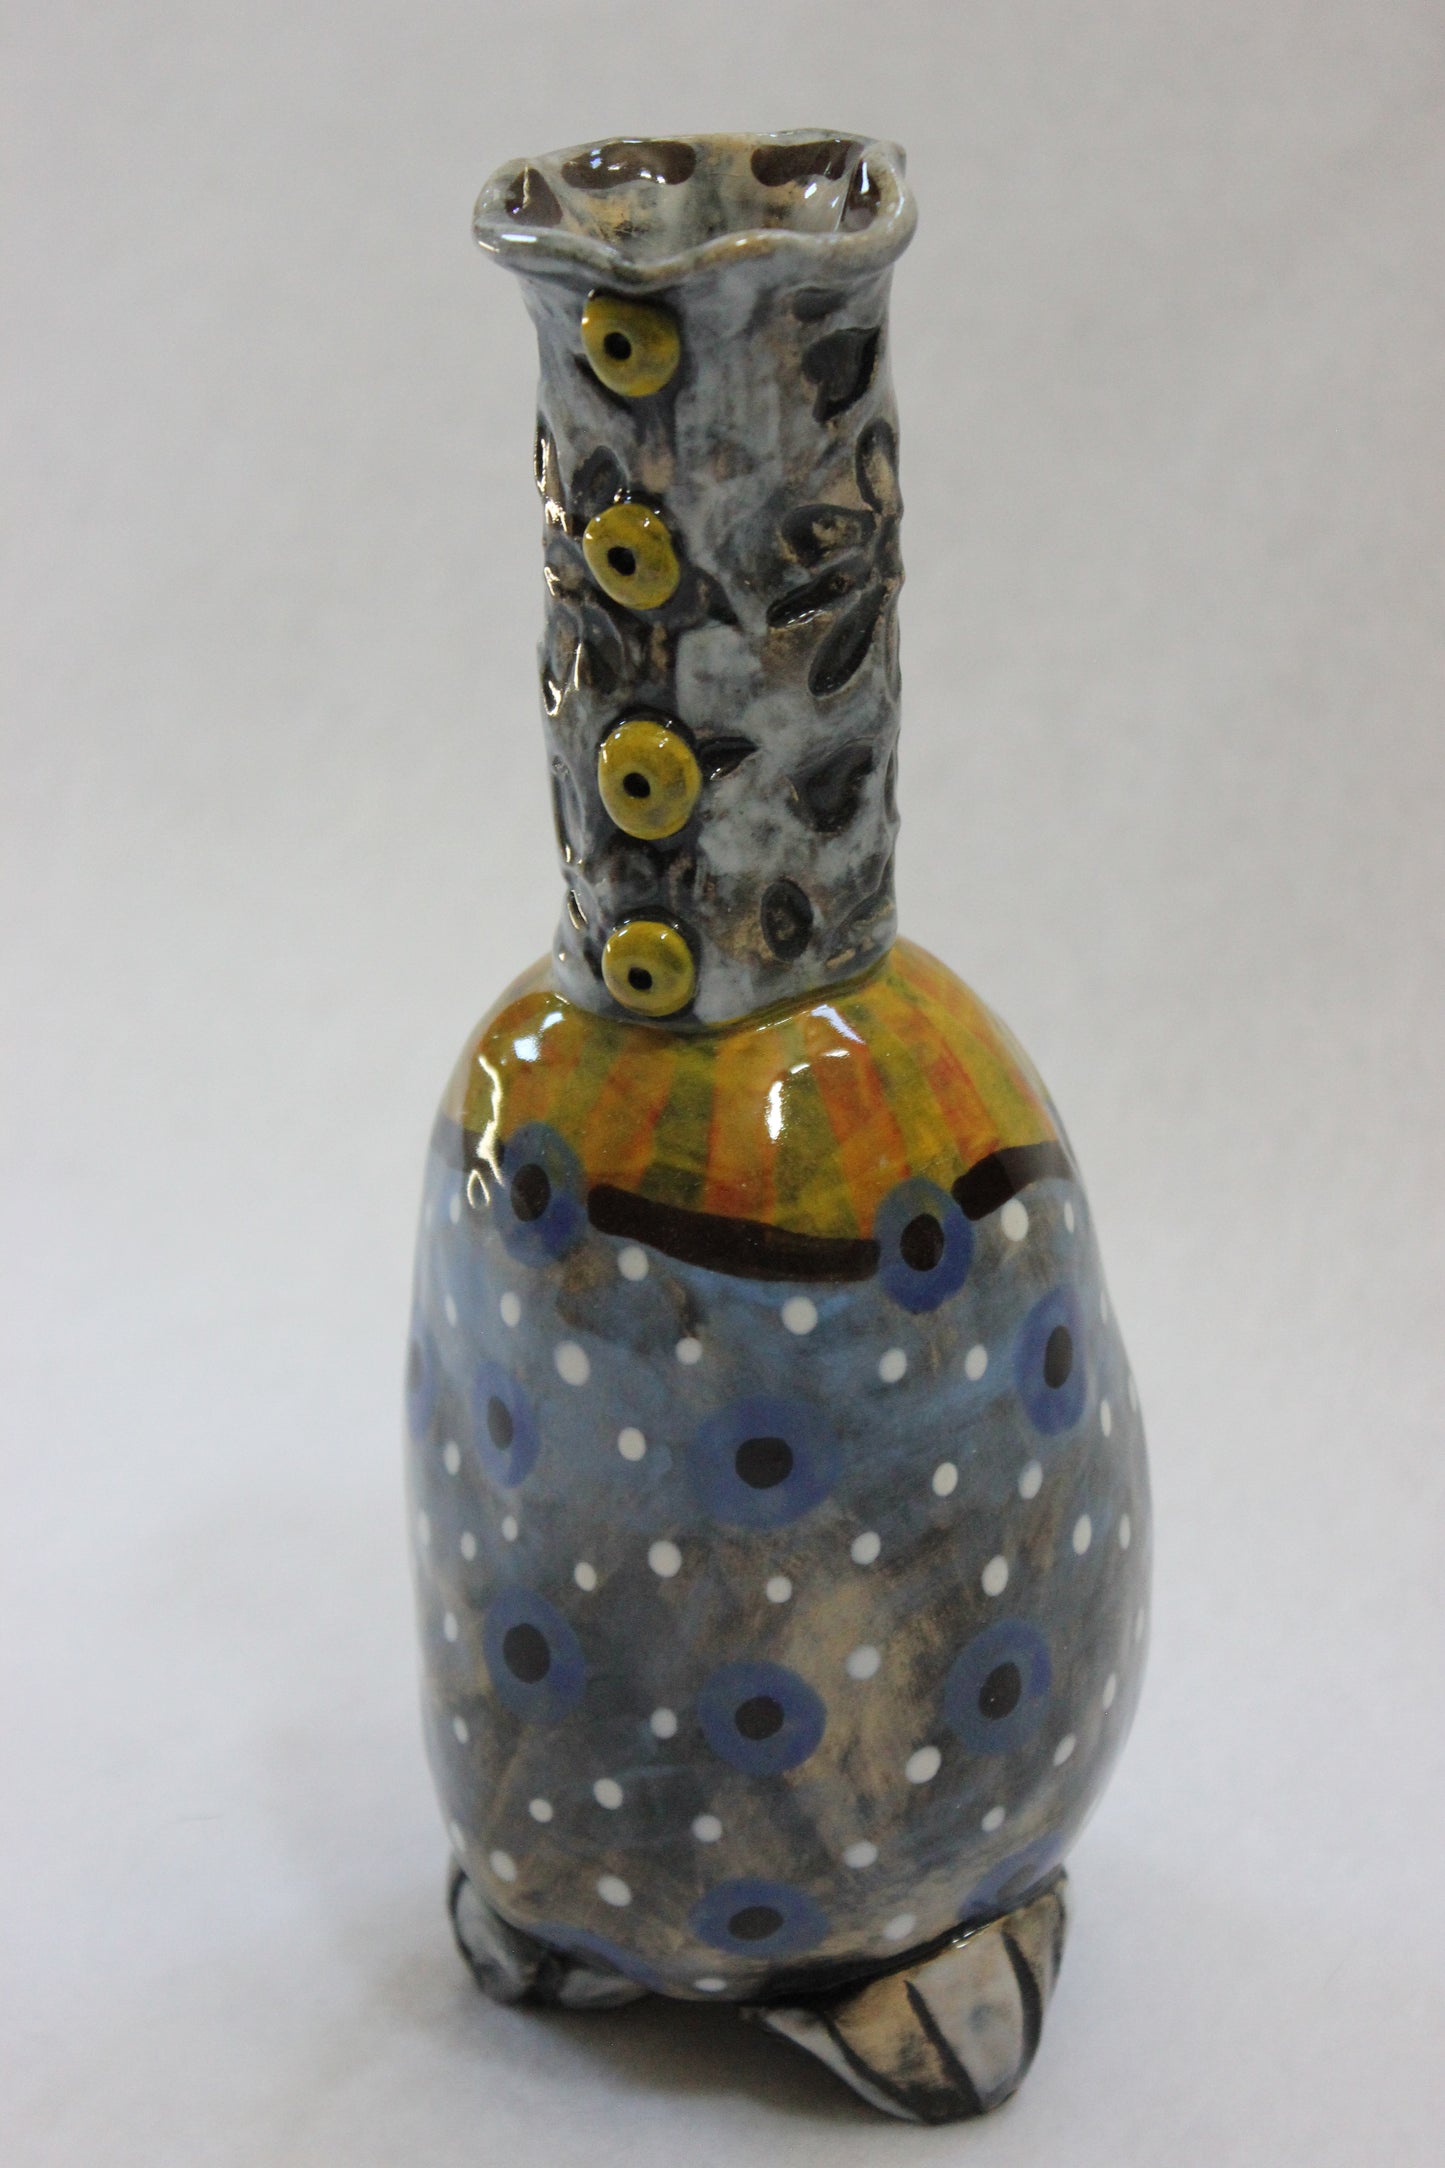 Fantasy Styled and Painted Ceramic Bud Vase